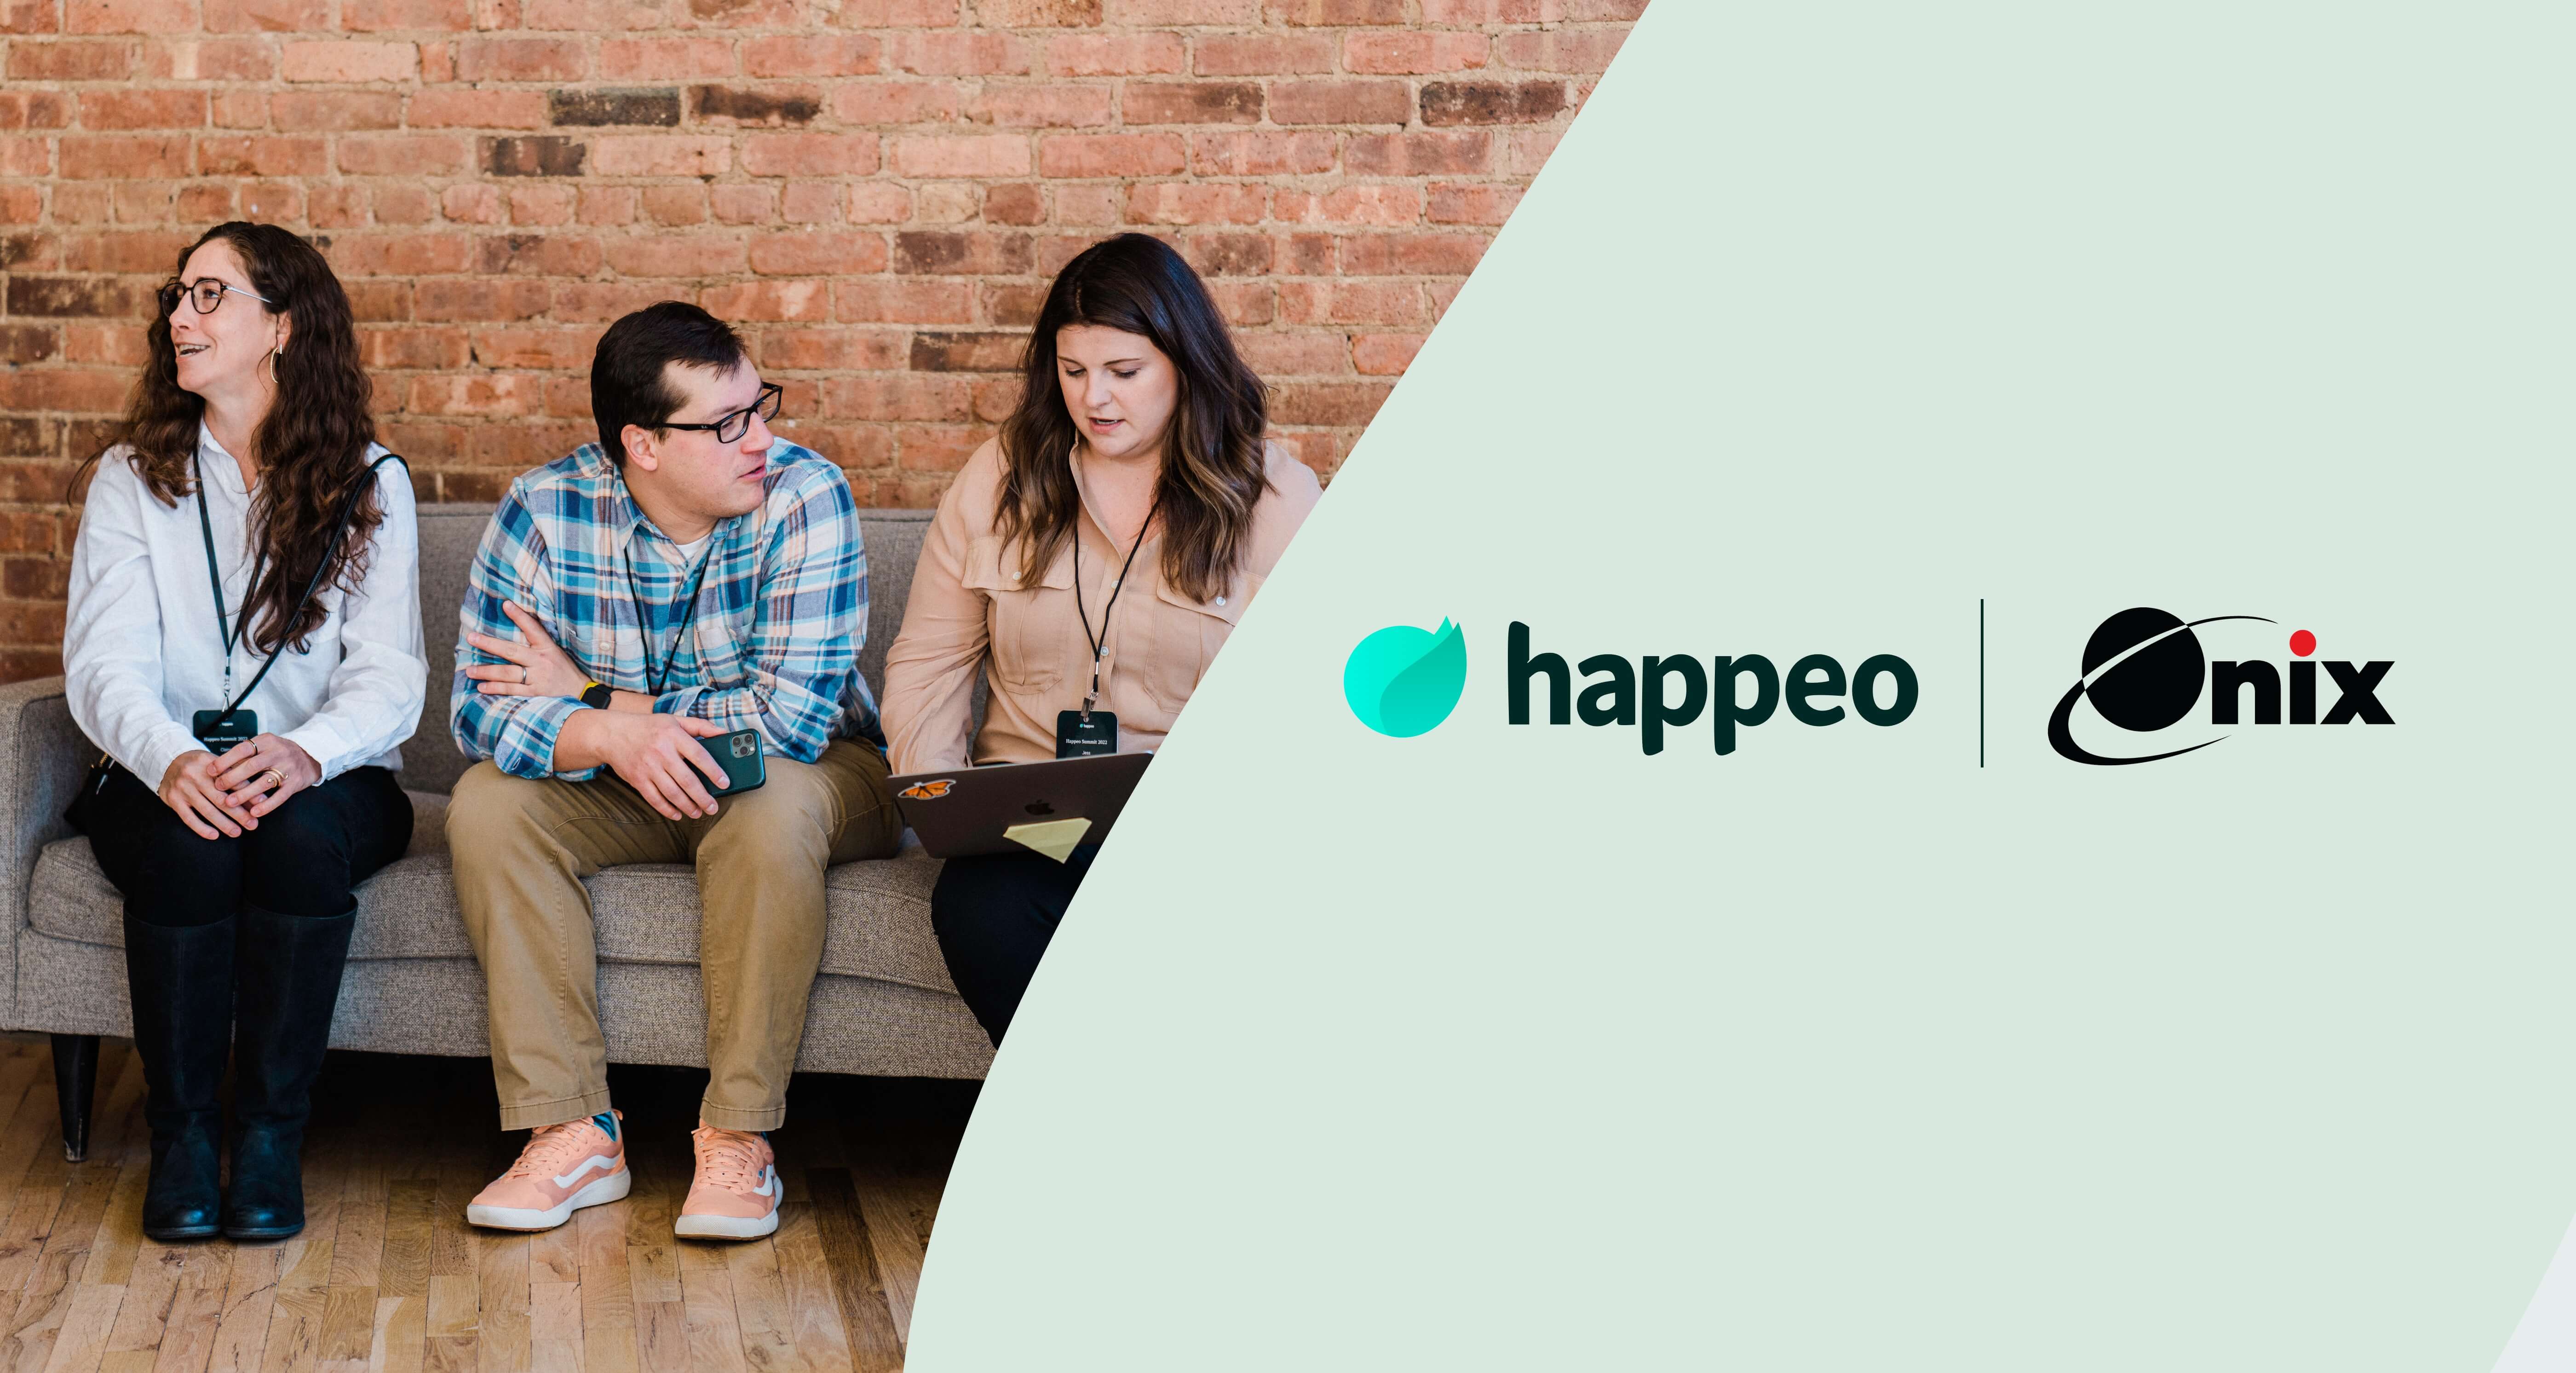 How Happeo's logo is used alongside partners' logo